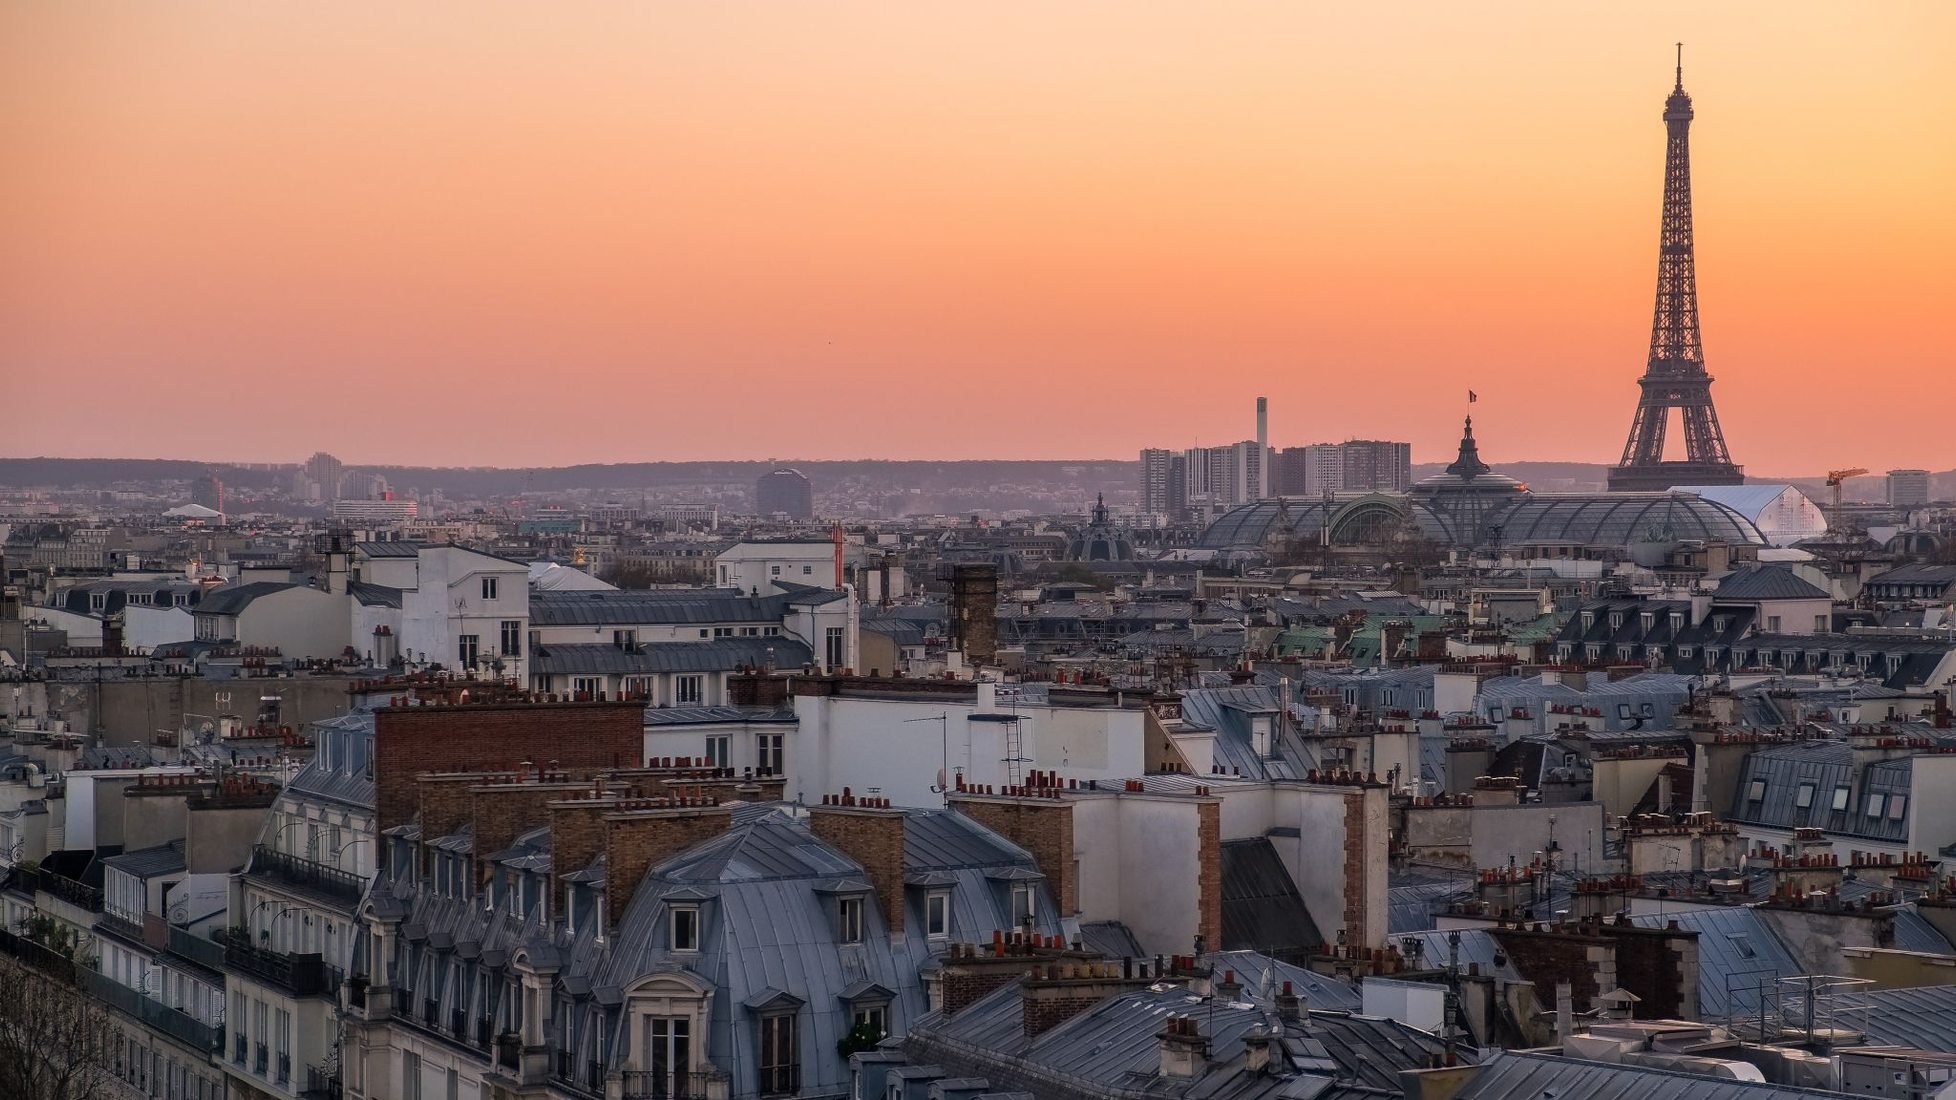 Galeries Lafayette Rooftop Terrace: A view over Paris